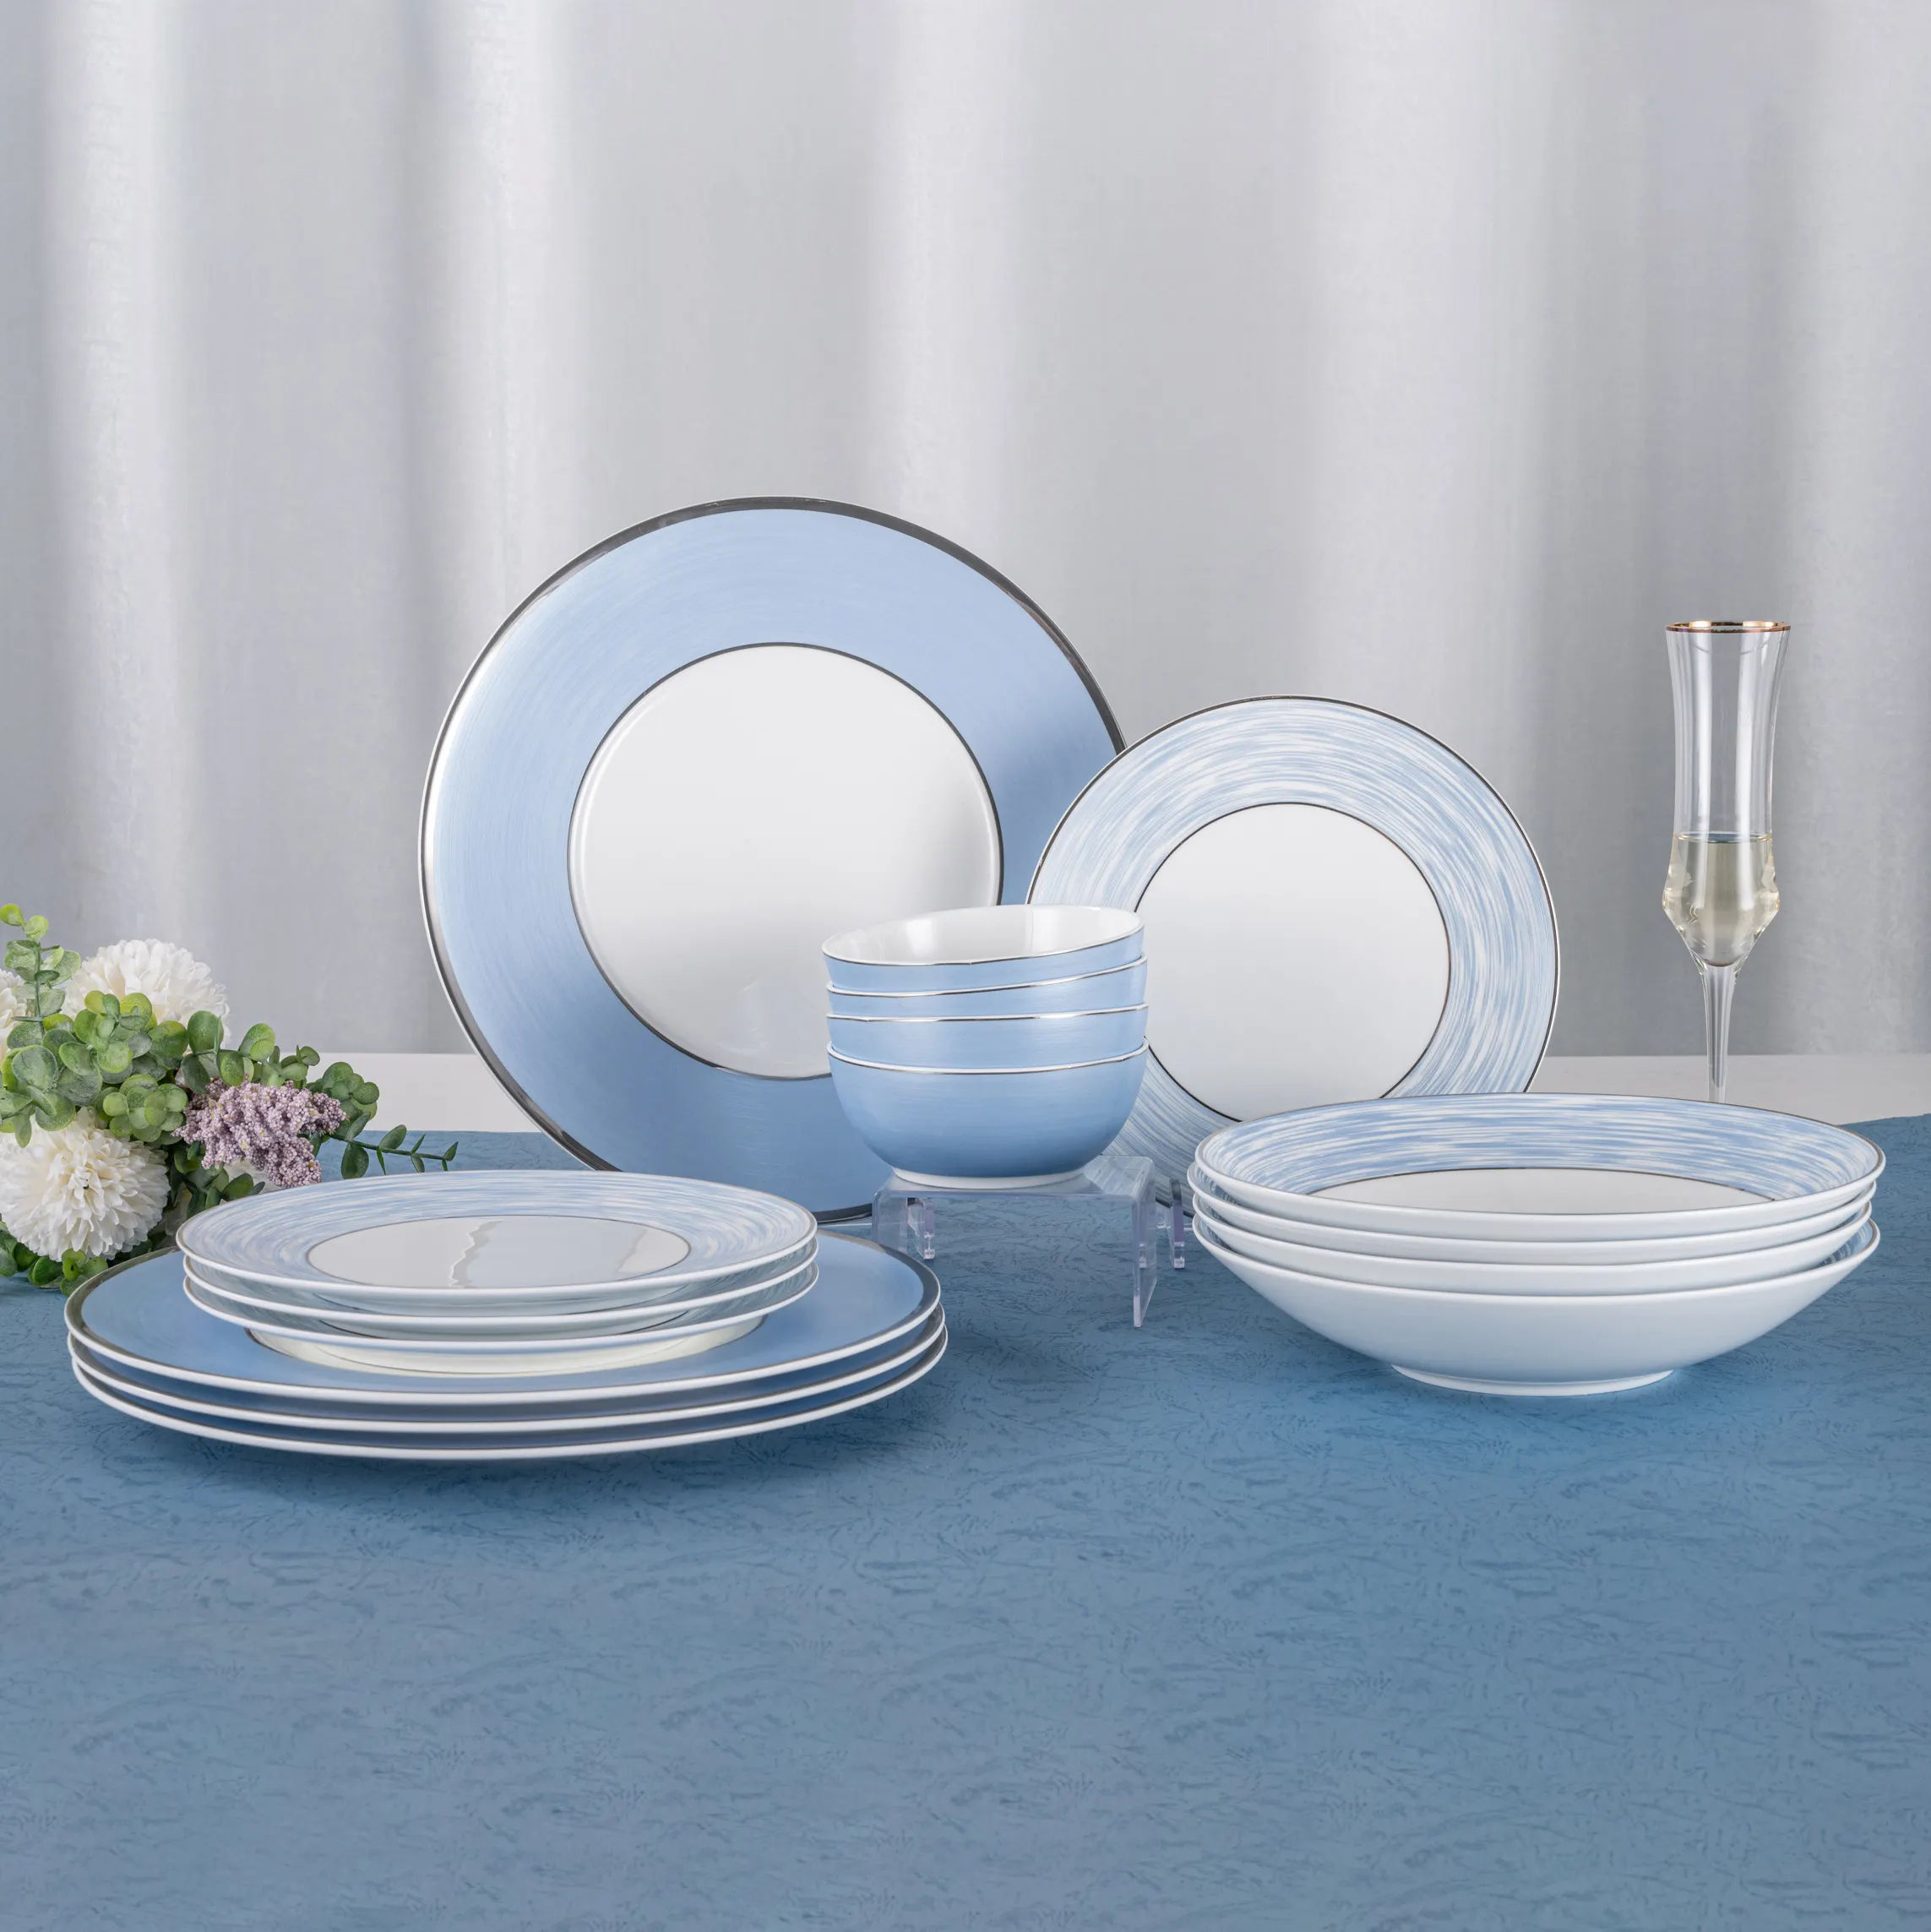 Conjunto de jantar PITO de cerâmica com borda prateada estilo moderno para banquetes azuis de luxo para casamento